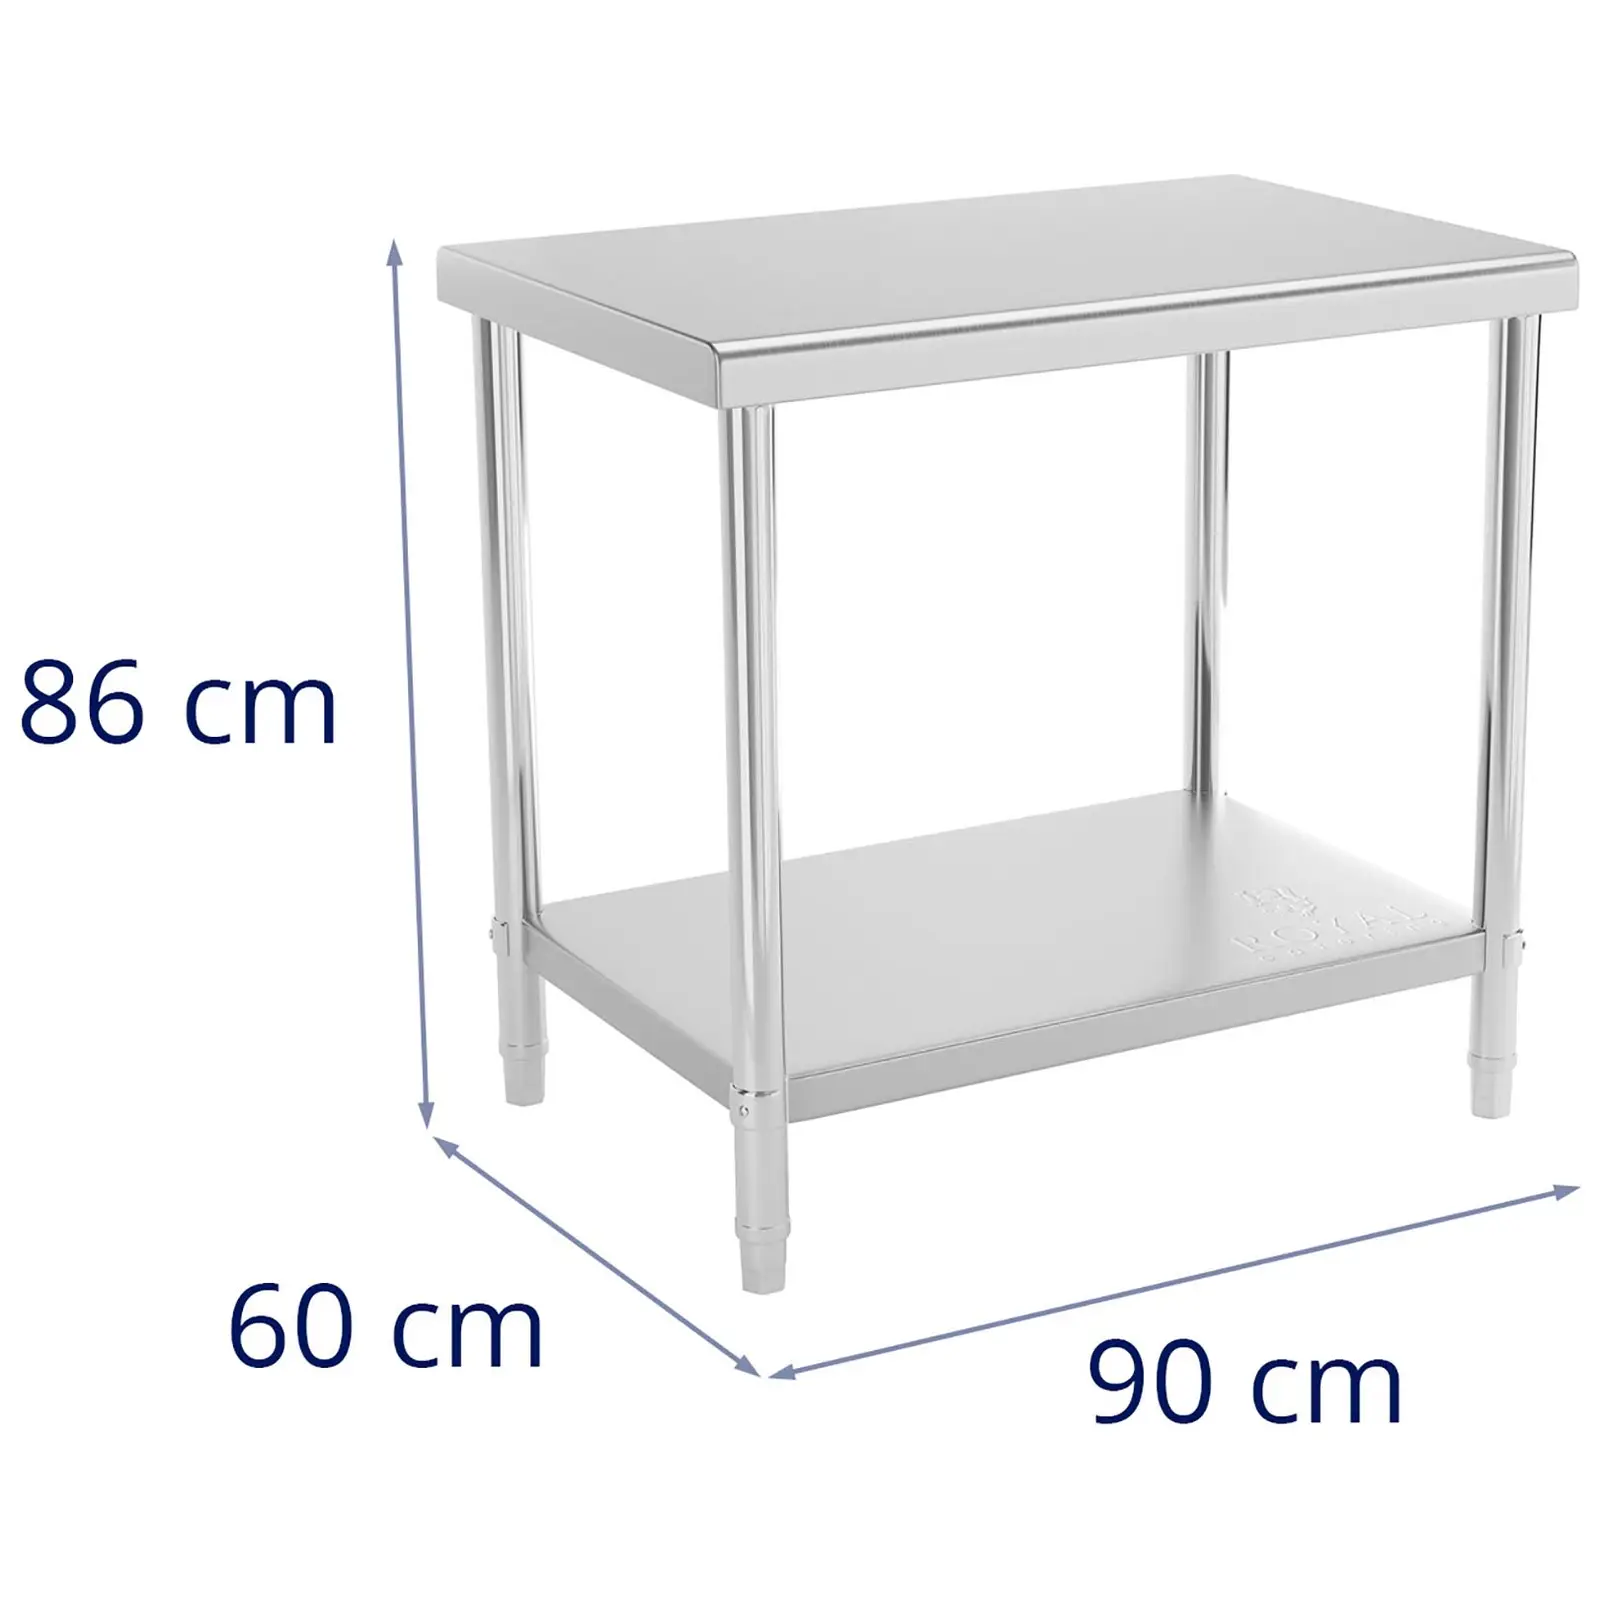 Teräspöytä - 90 x 60 cm - 210 kg kantavuus